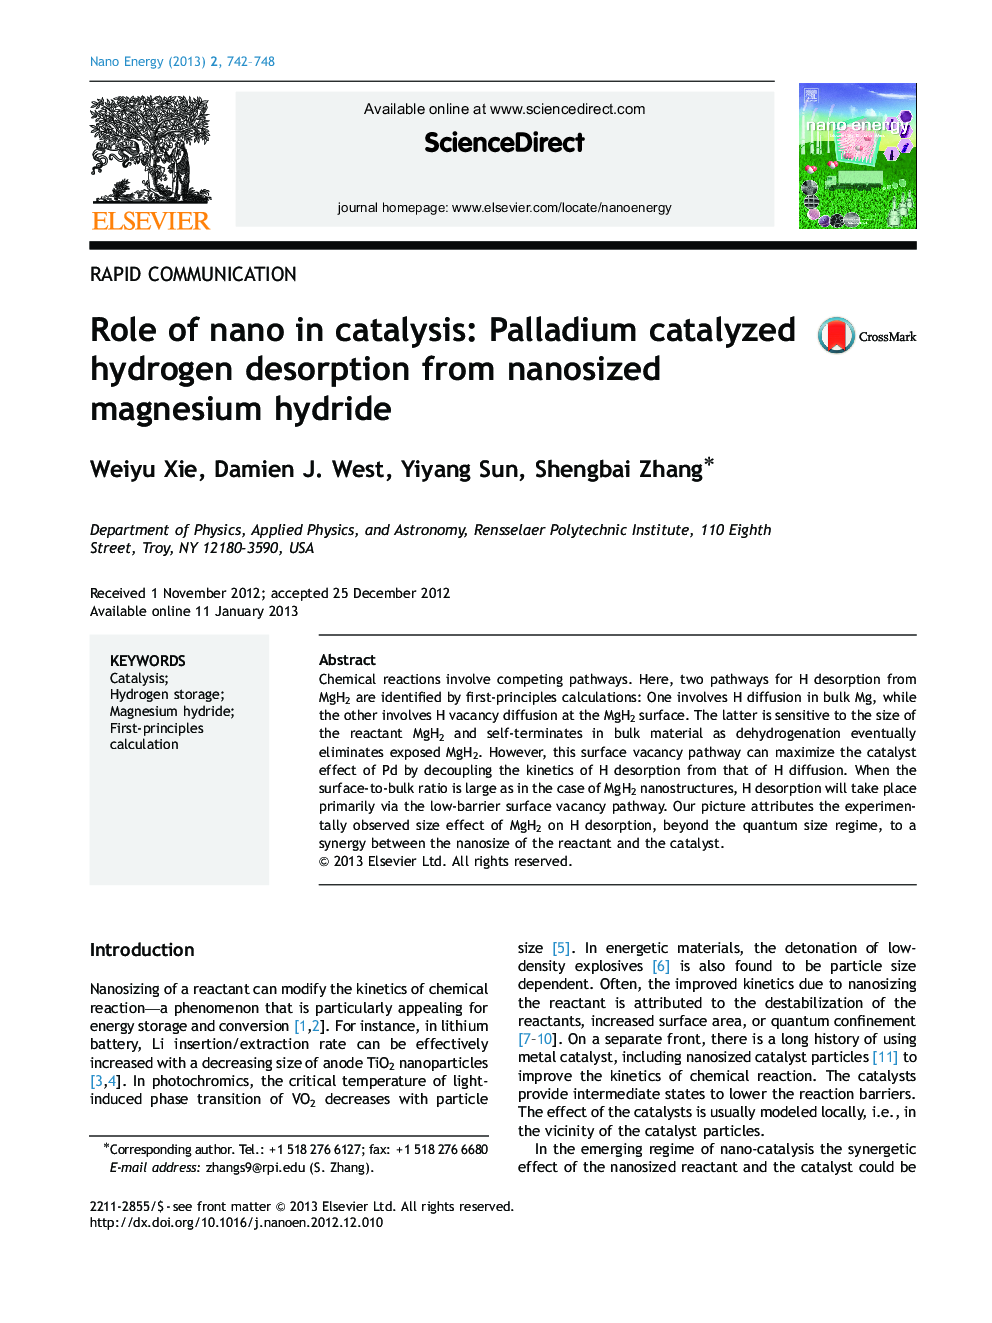 Role of nano in catalysis: Palladium catalyzed hydrogen desorption from nanosized magnesium hydride